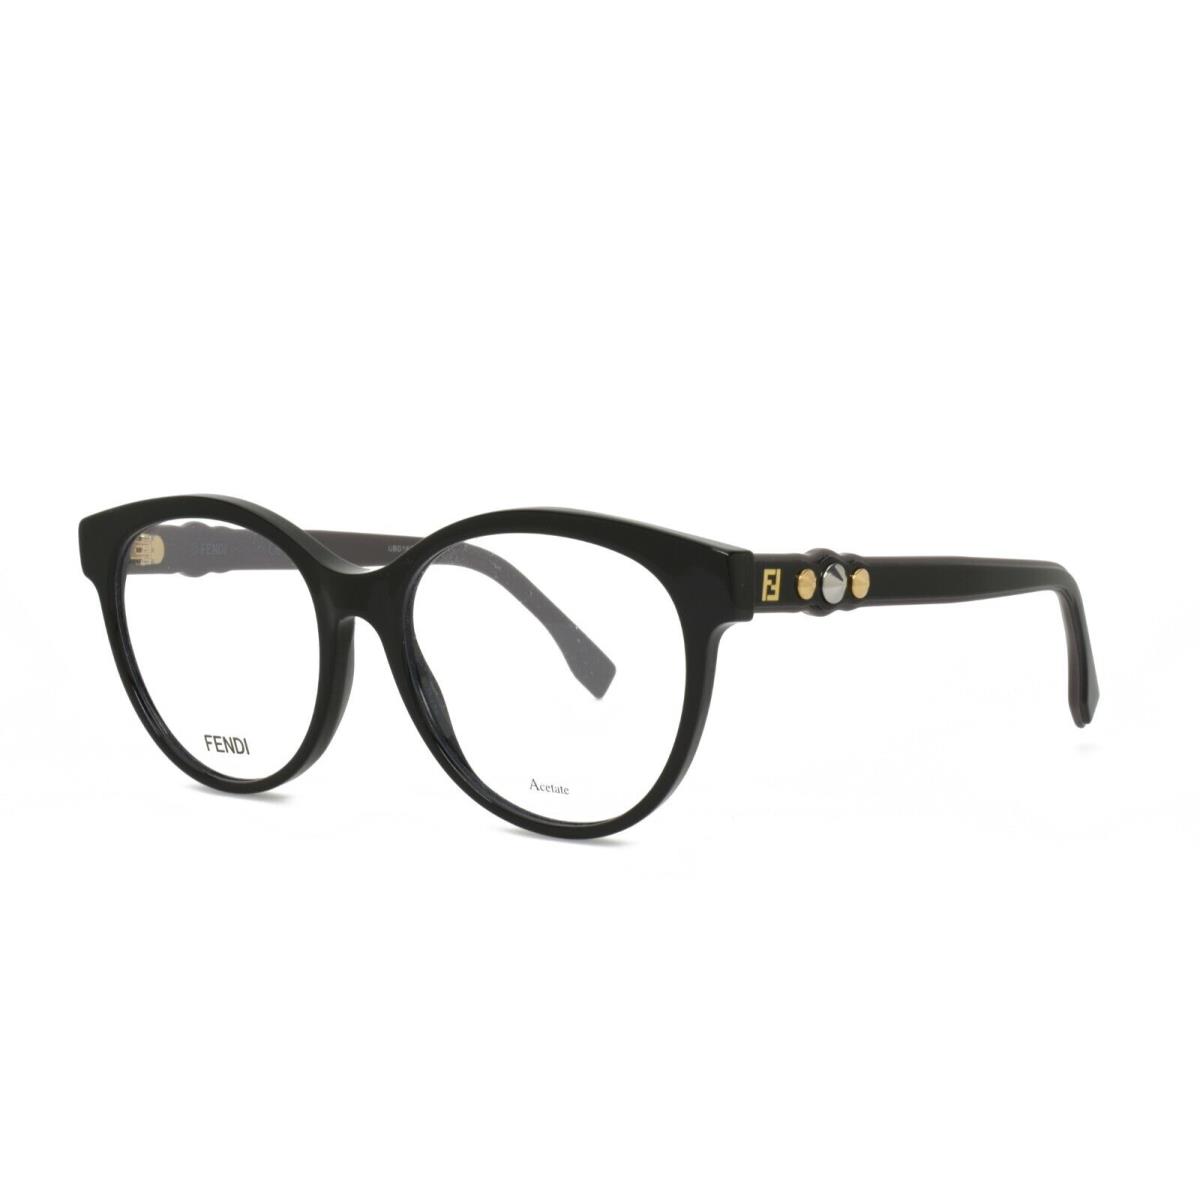 Fendi 0275 807 52-17-145 Black Eyeglasses Frames